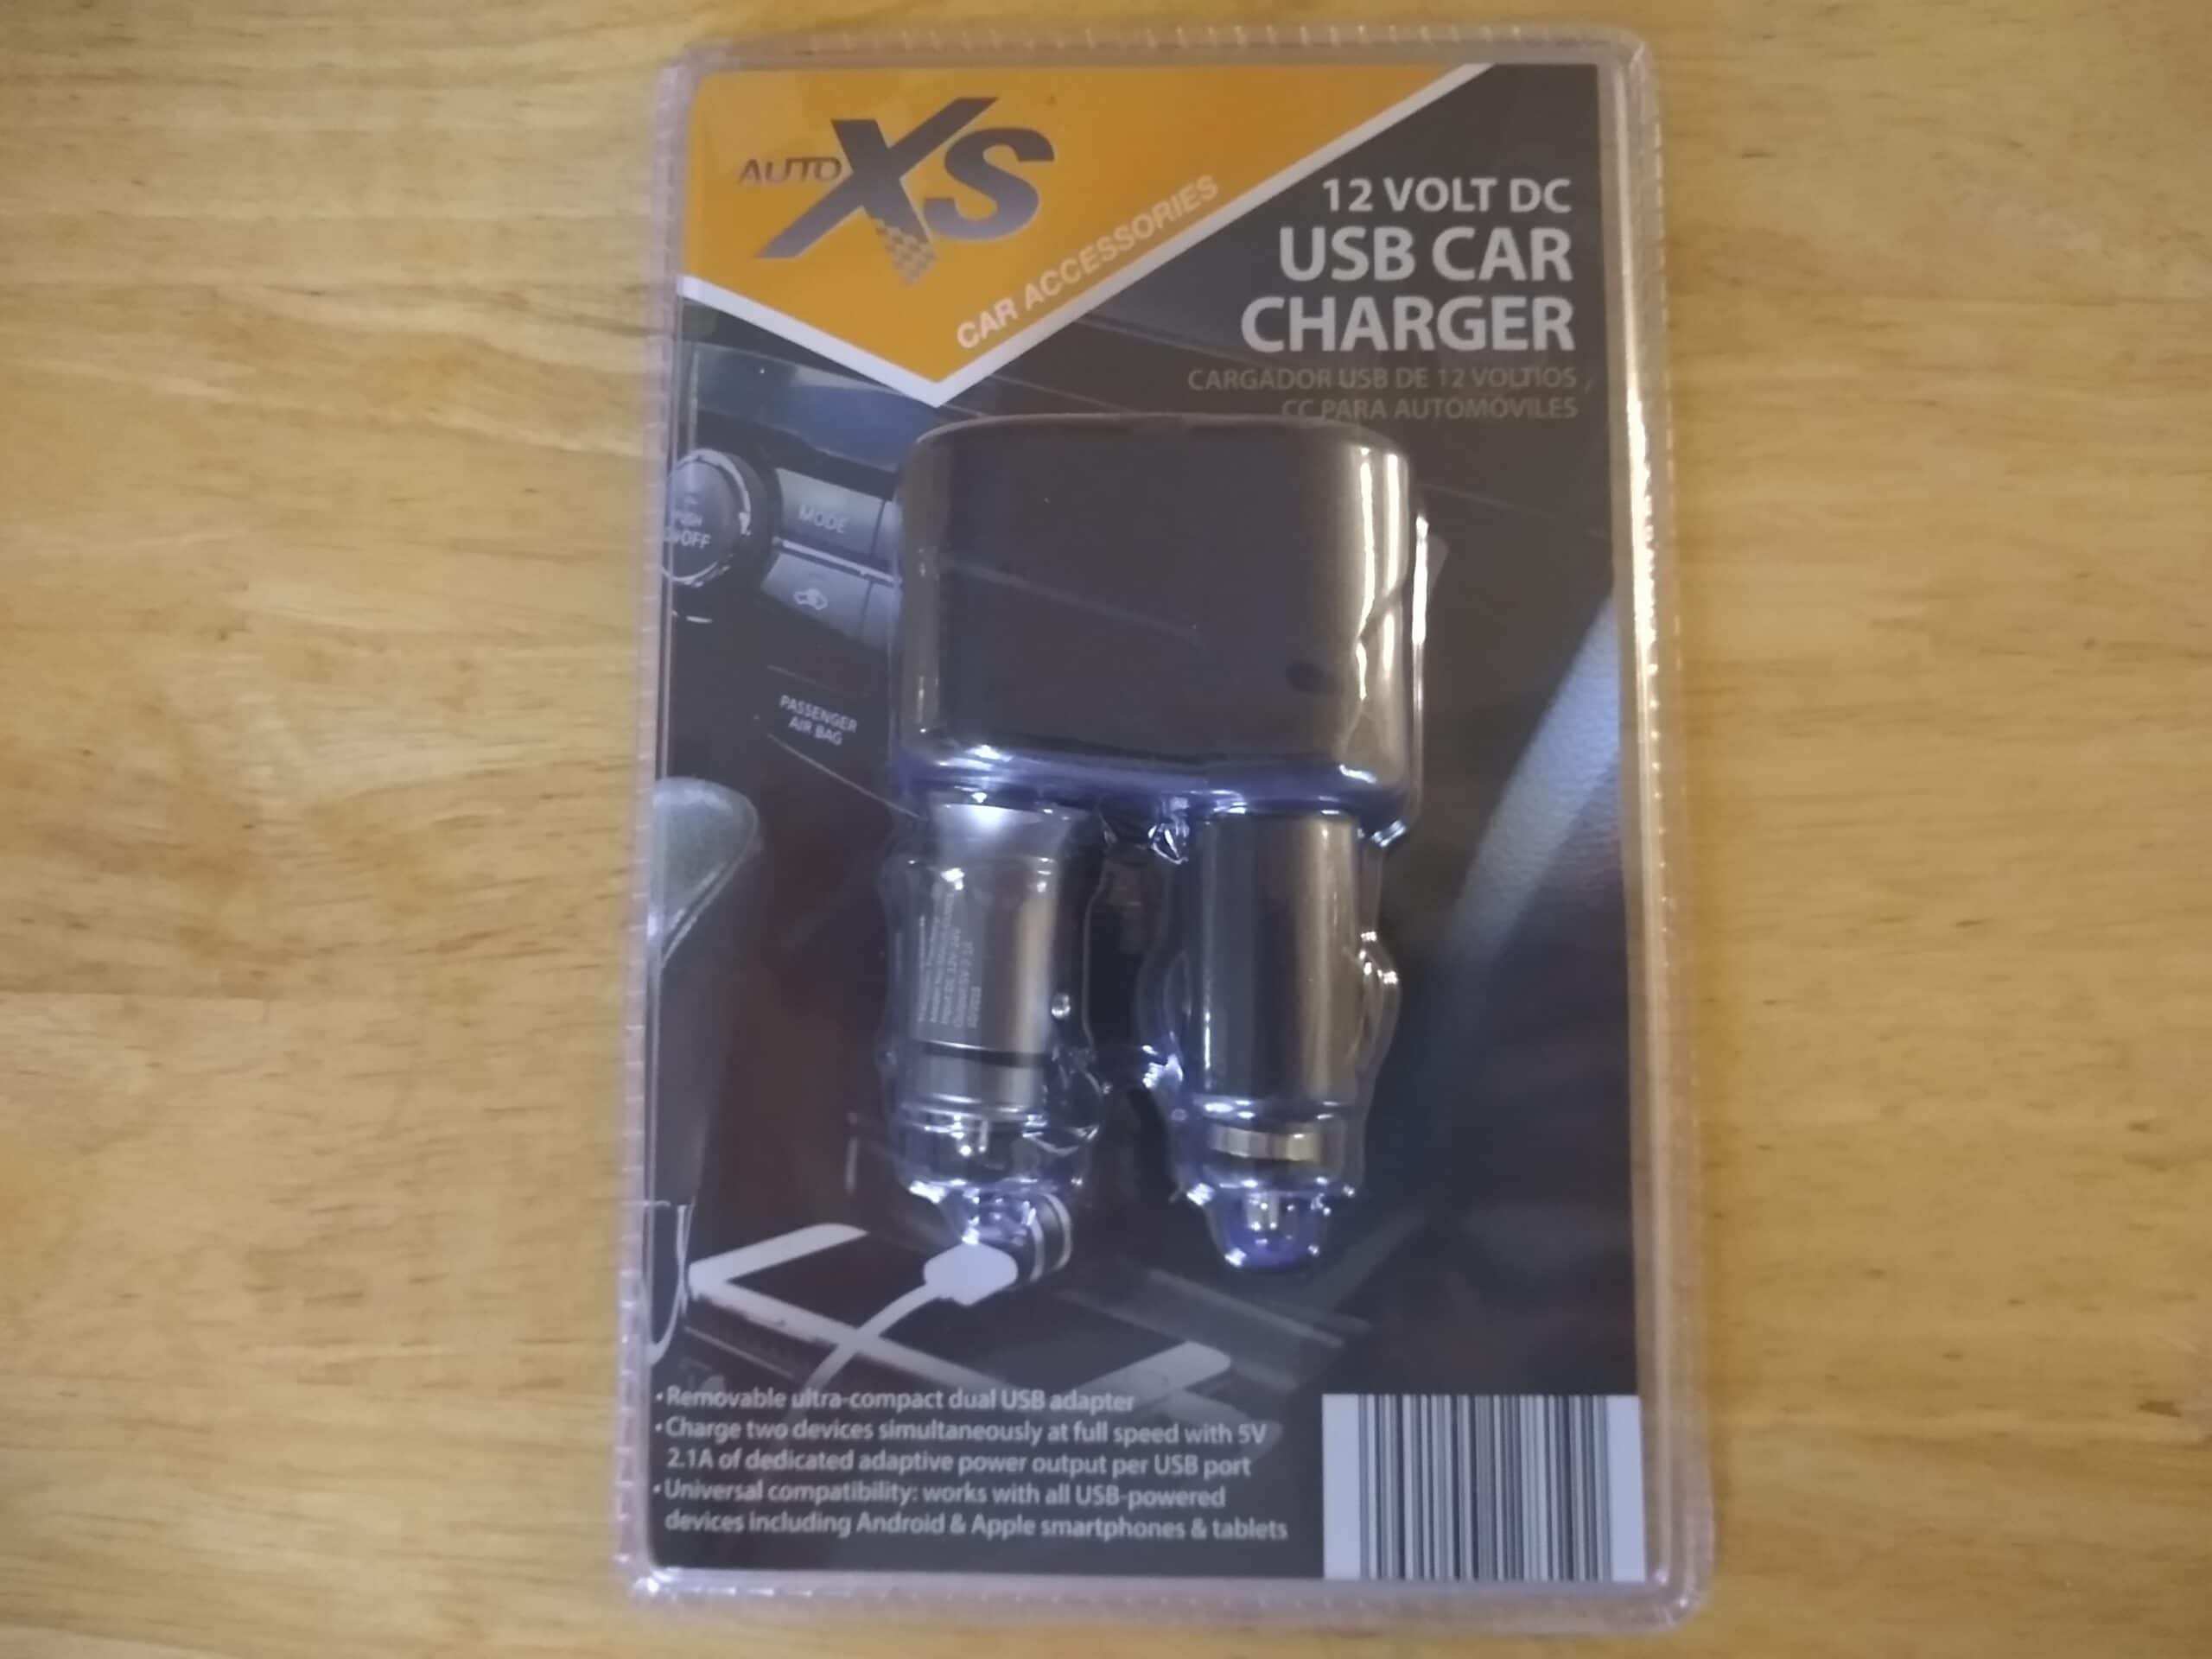 Auto XS 12 Volt DC USB Car Charger